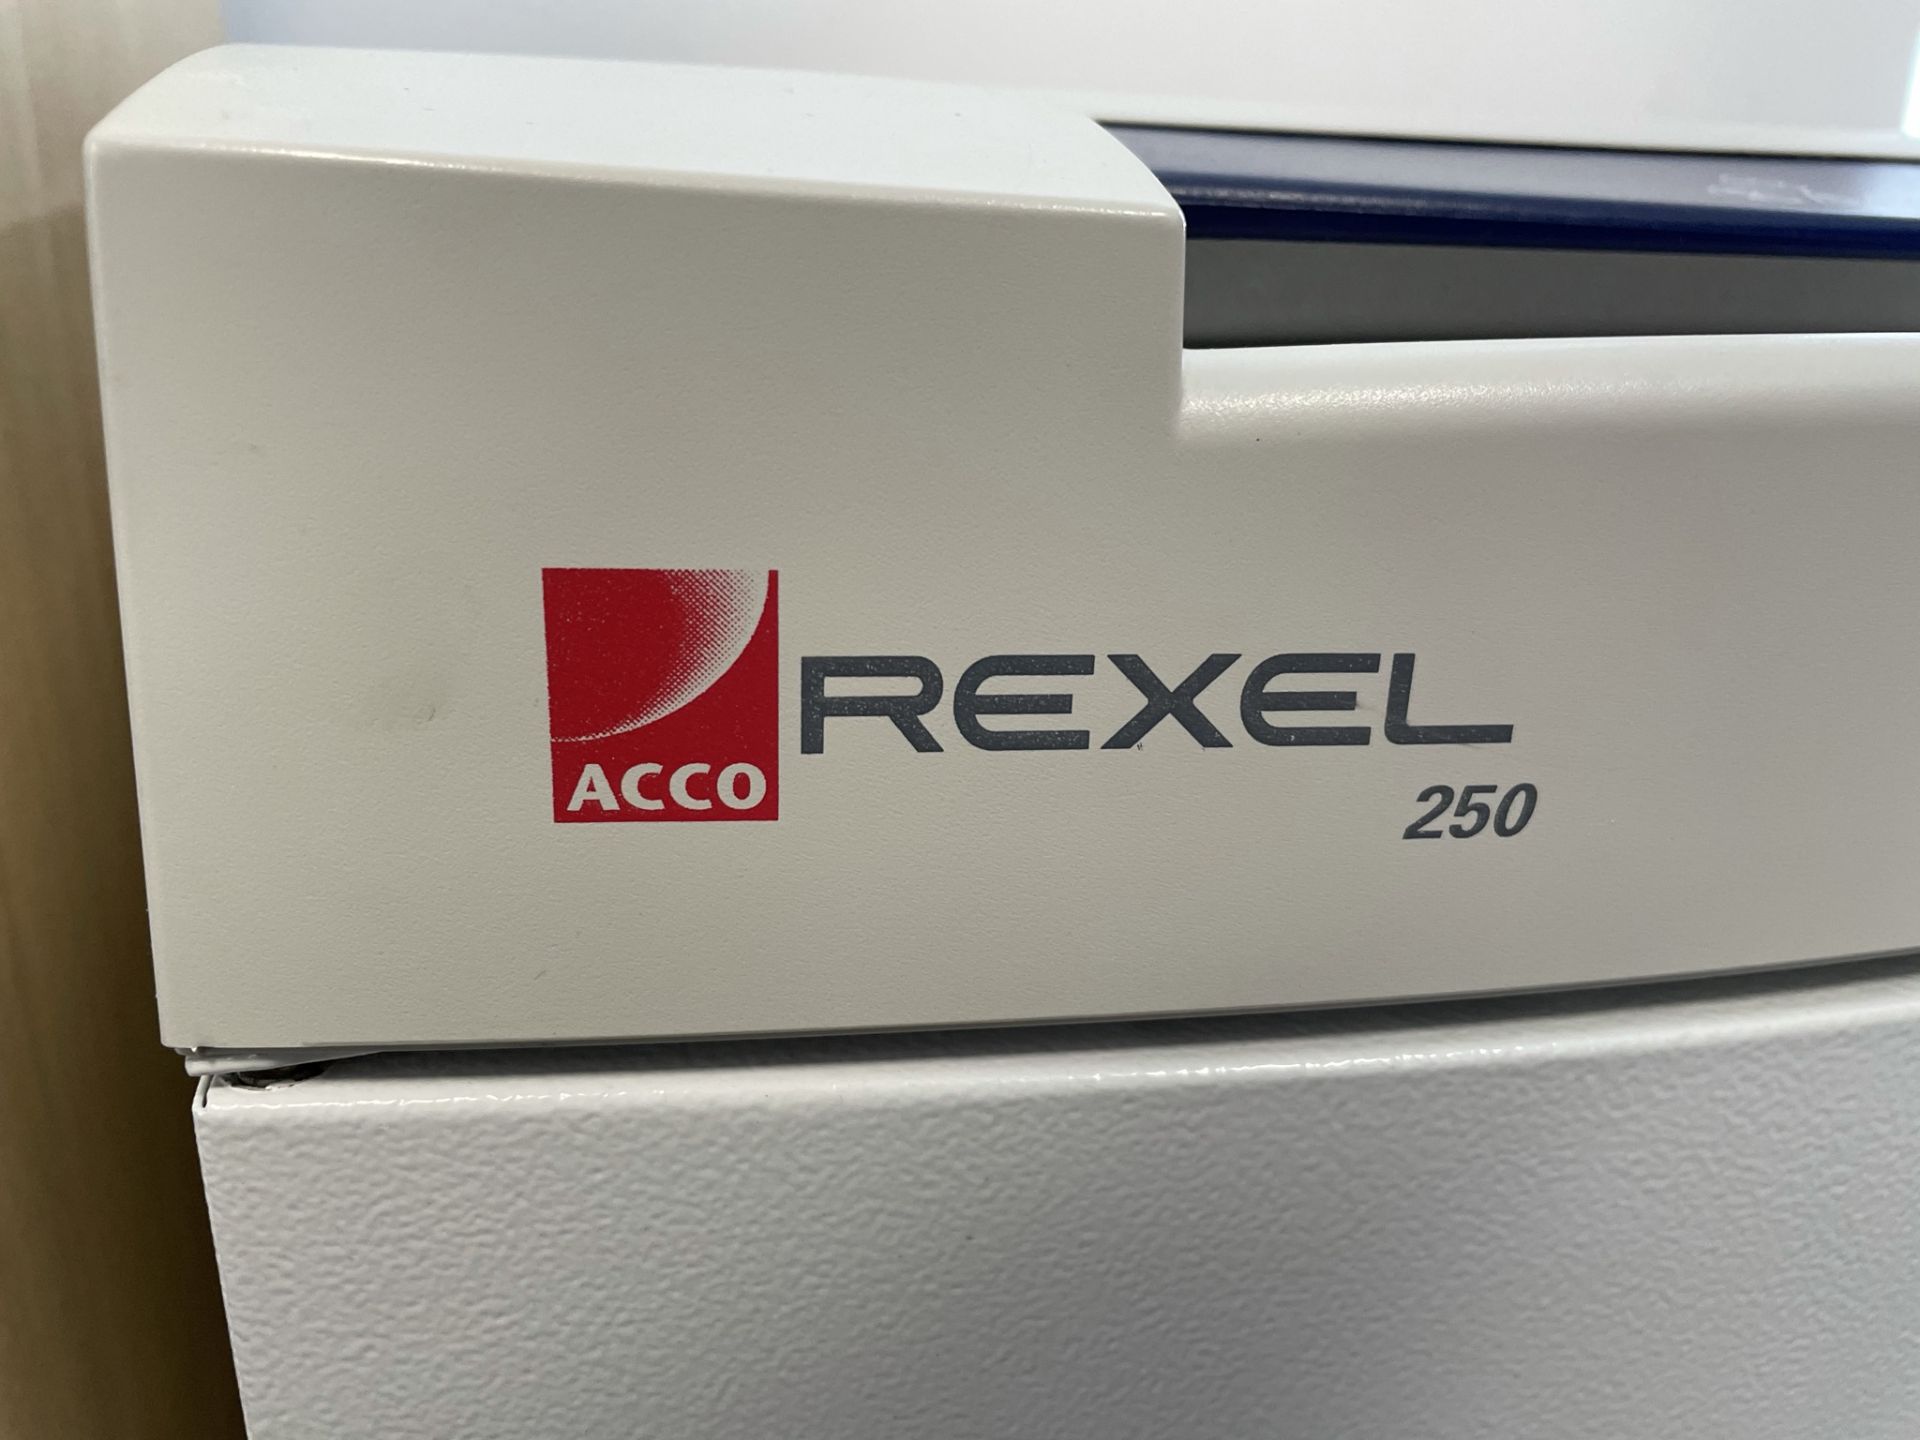 Rexel Acco250 Heavy Duty Office Shredder - Image 2 of 2